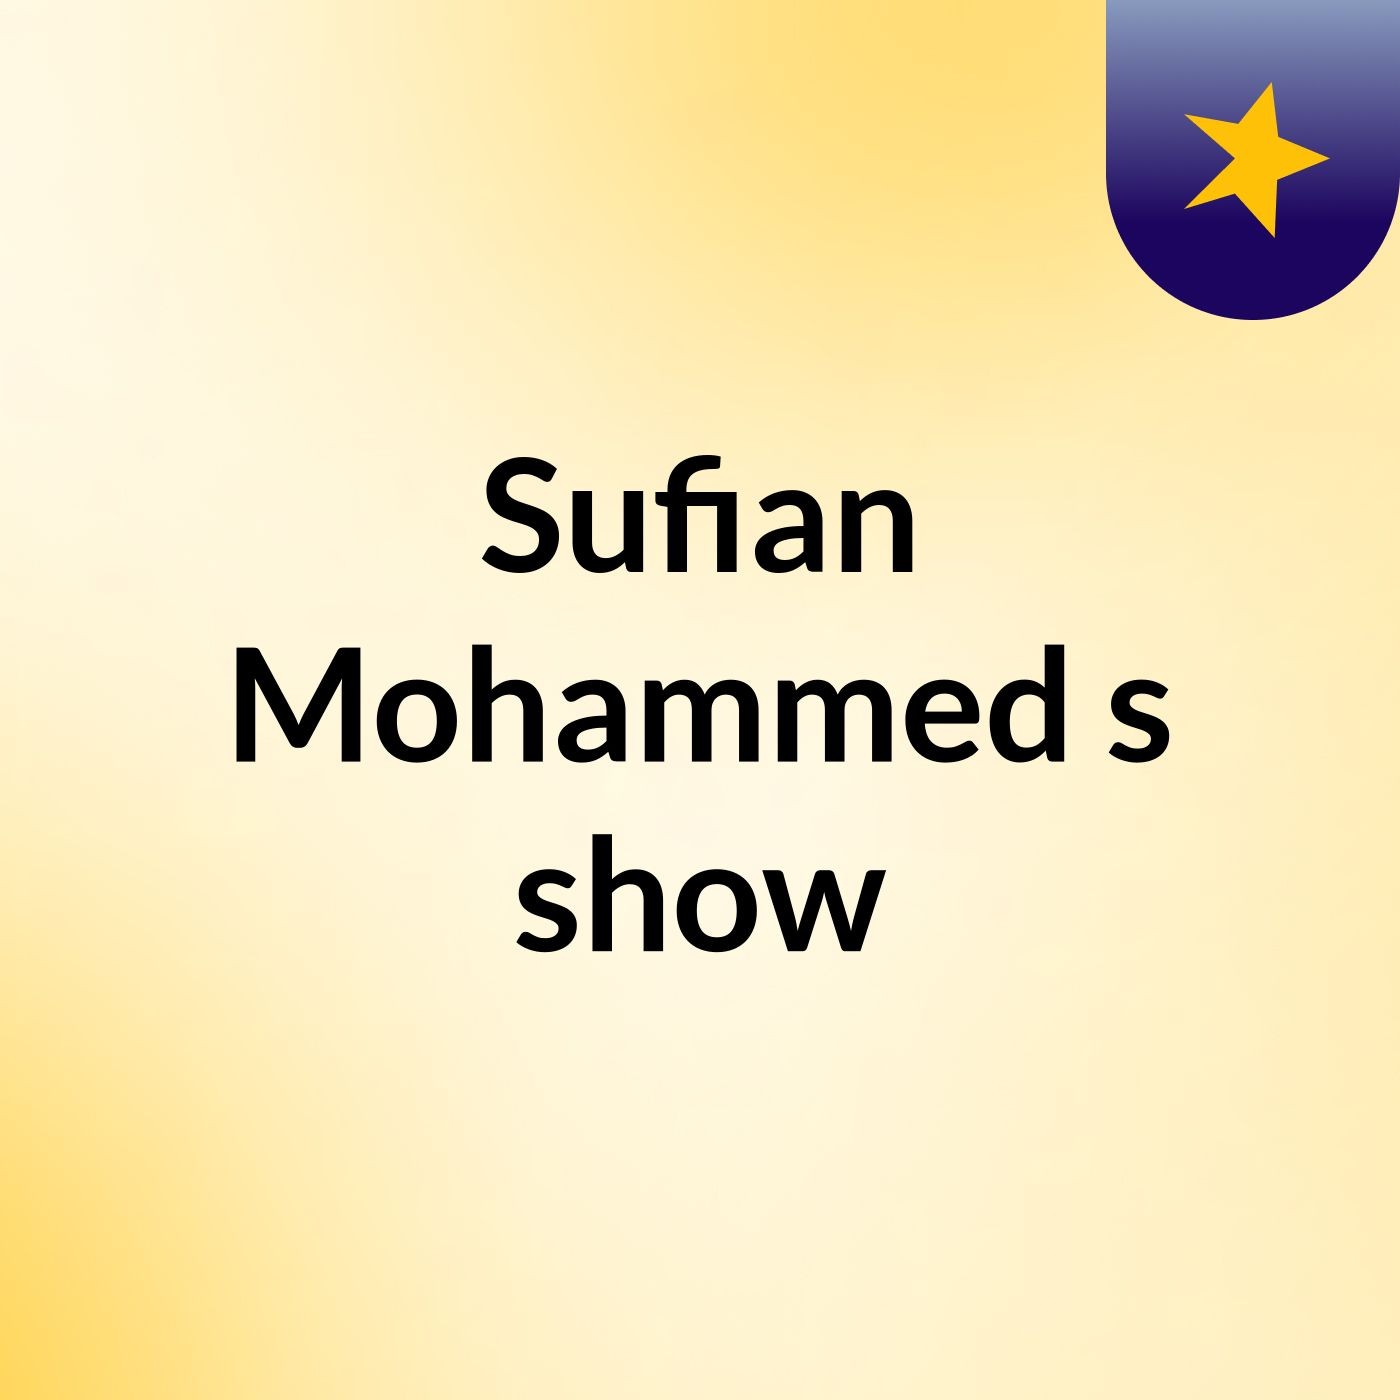 Episode 3 - Sufian Mohammed's show